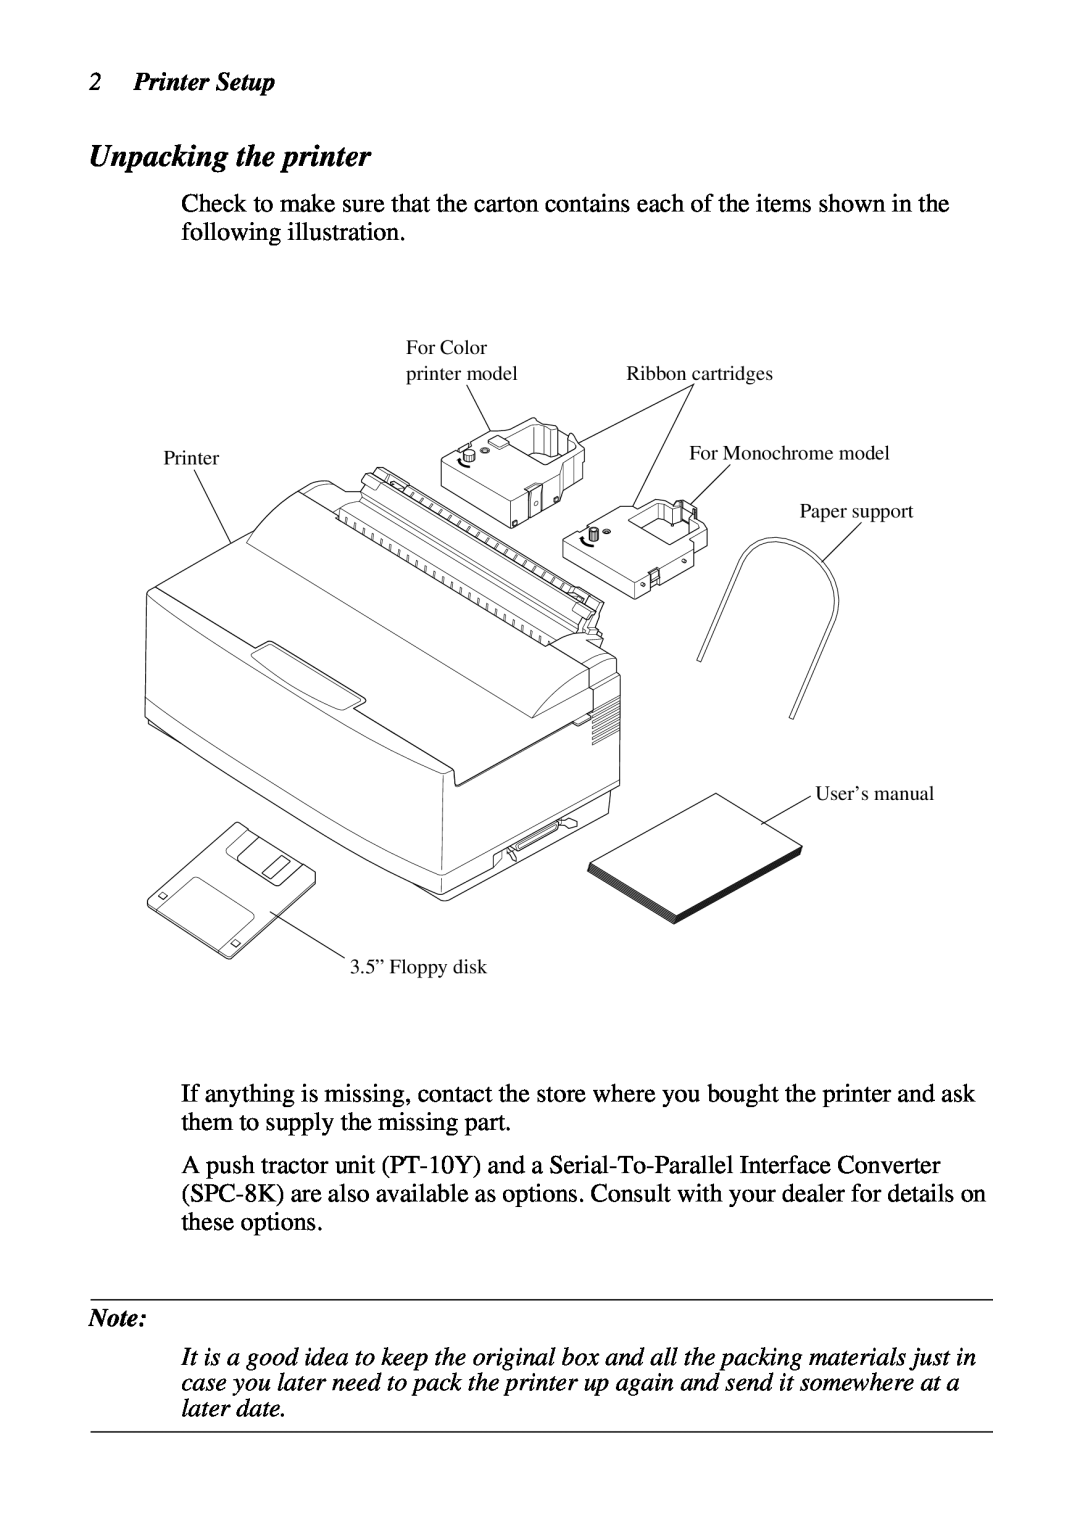 Star Micronics NX-2460C user manual Unpacking the printer, Printer Setup 